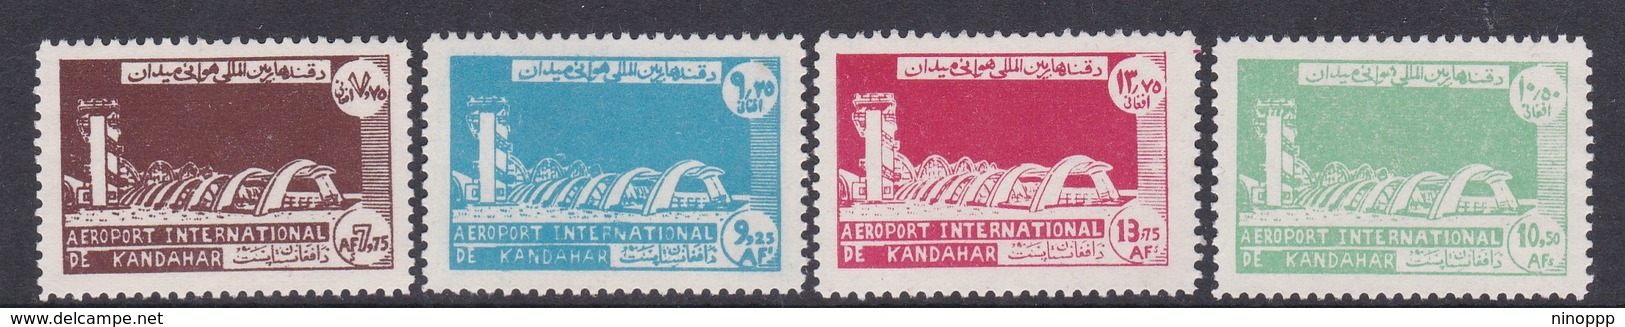 Afghanistan SG 514-517 1964 Inauguration Of Kandahar Airport MNH - Afghanistan